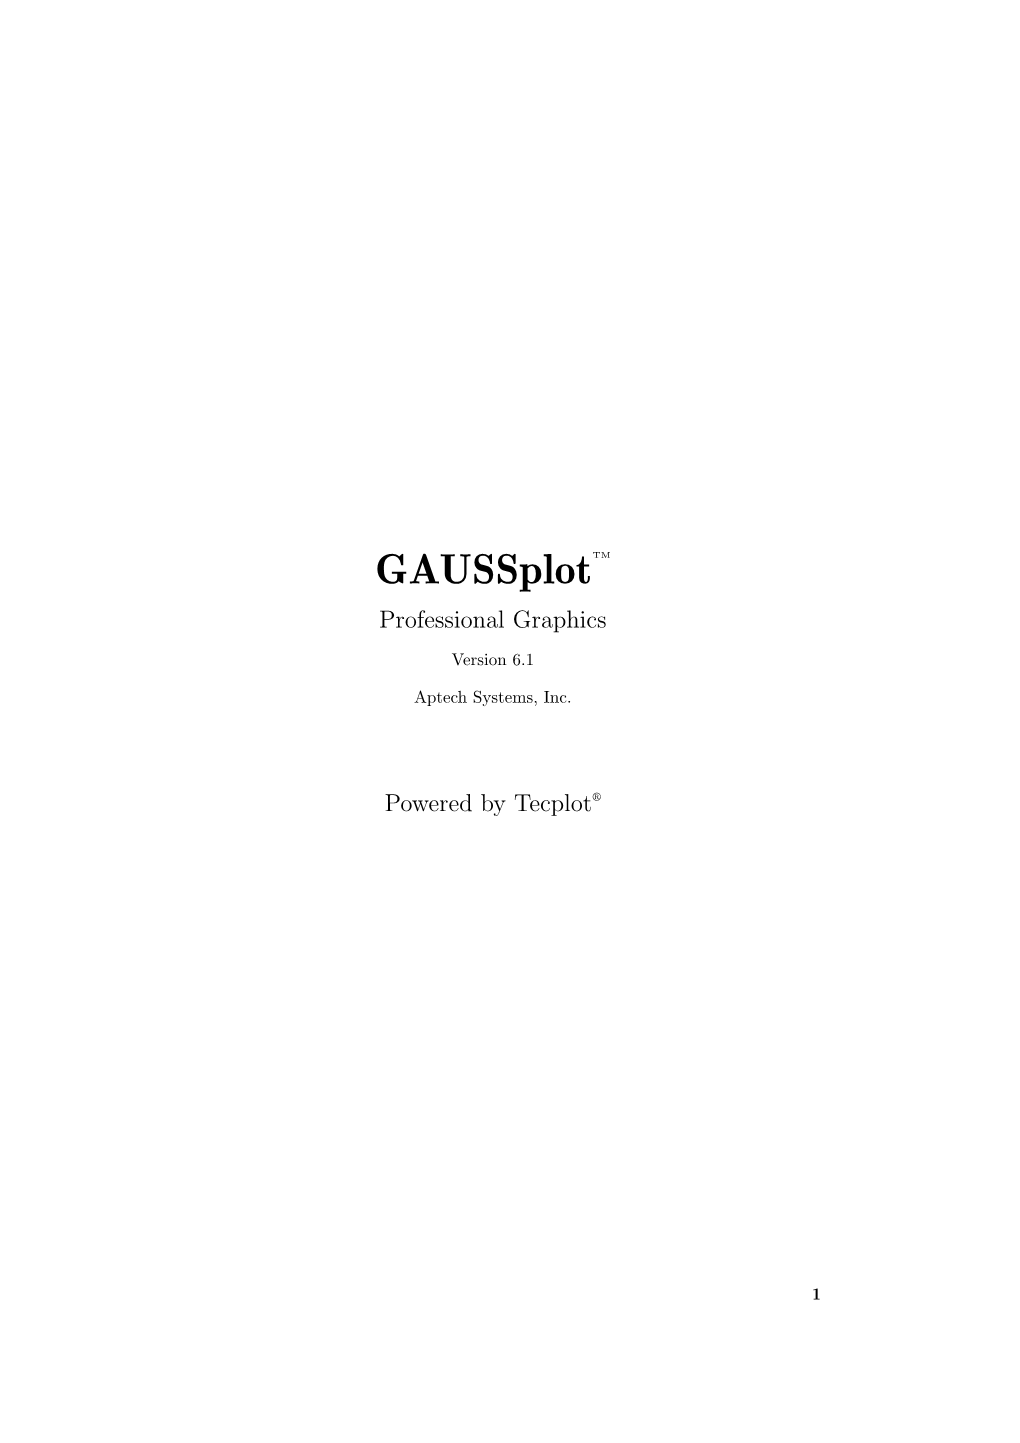 Gaussplottm Professional Graphics